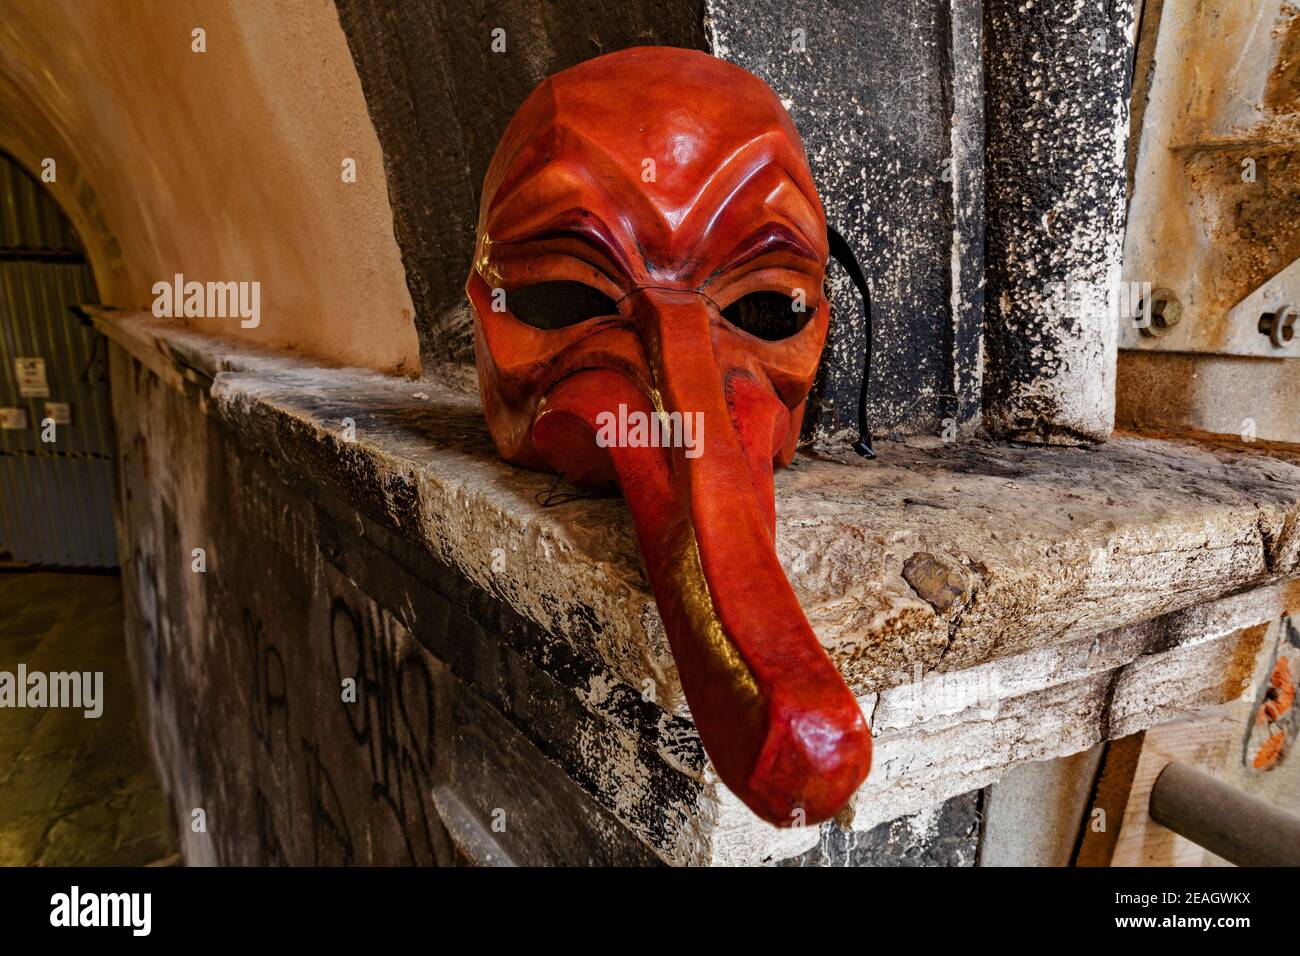 Leather theatre mask of Il Capitano (The Captain) by artist Carlo Setti from Venice who specialises in Commedia Dell'Arte masks. Stock Photo